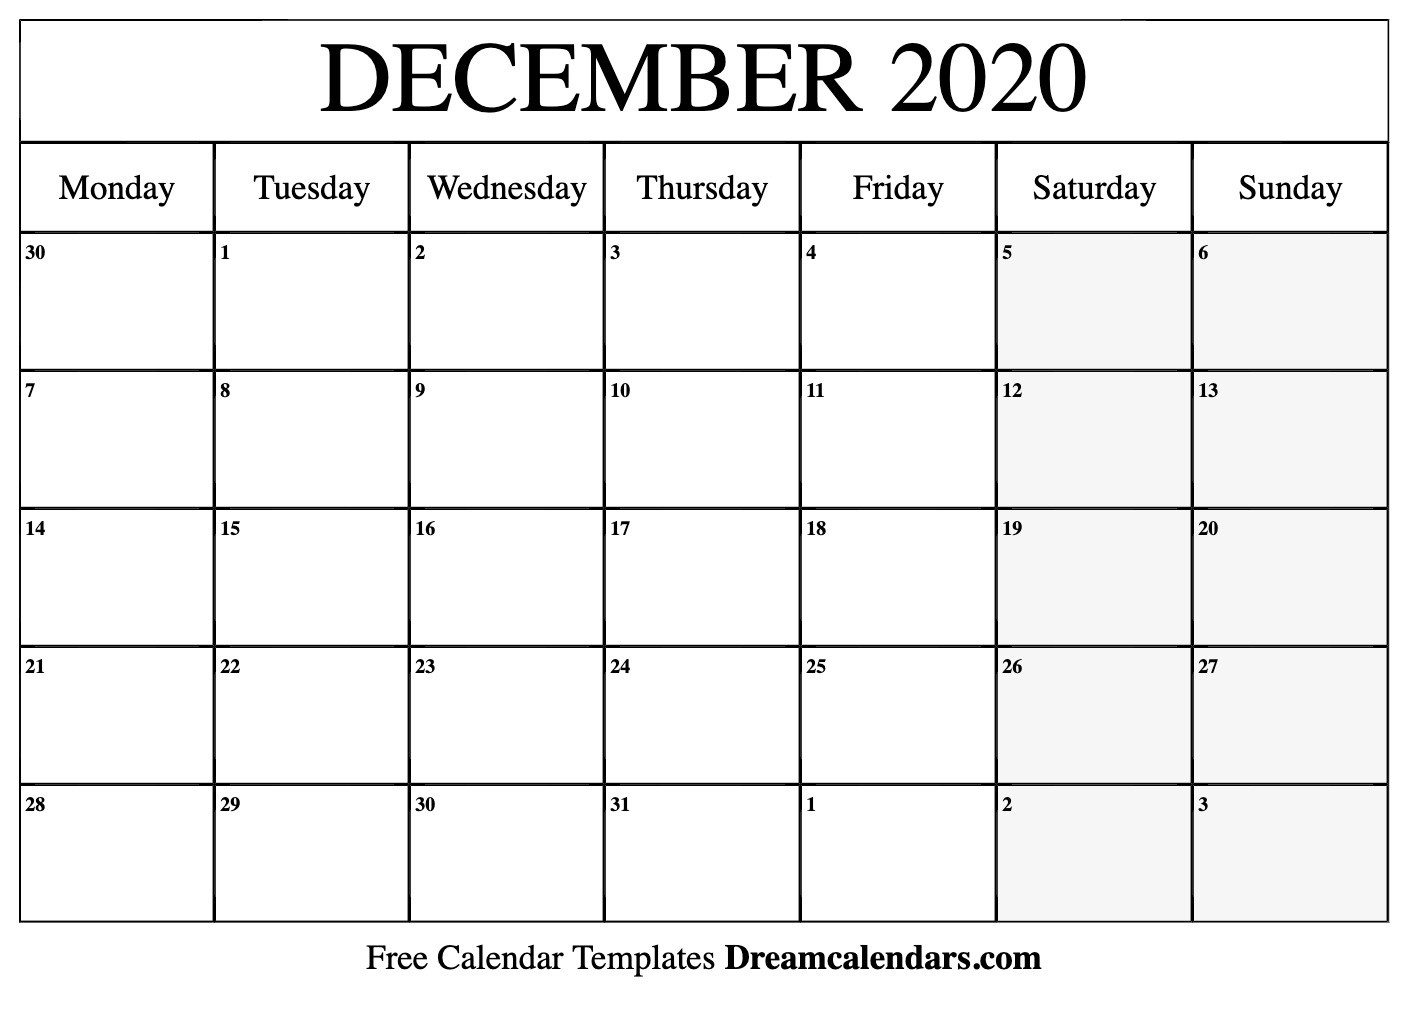 Printable December 2020 Calendar-2020 Calendar Templates Monday - Sunday